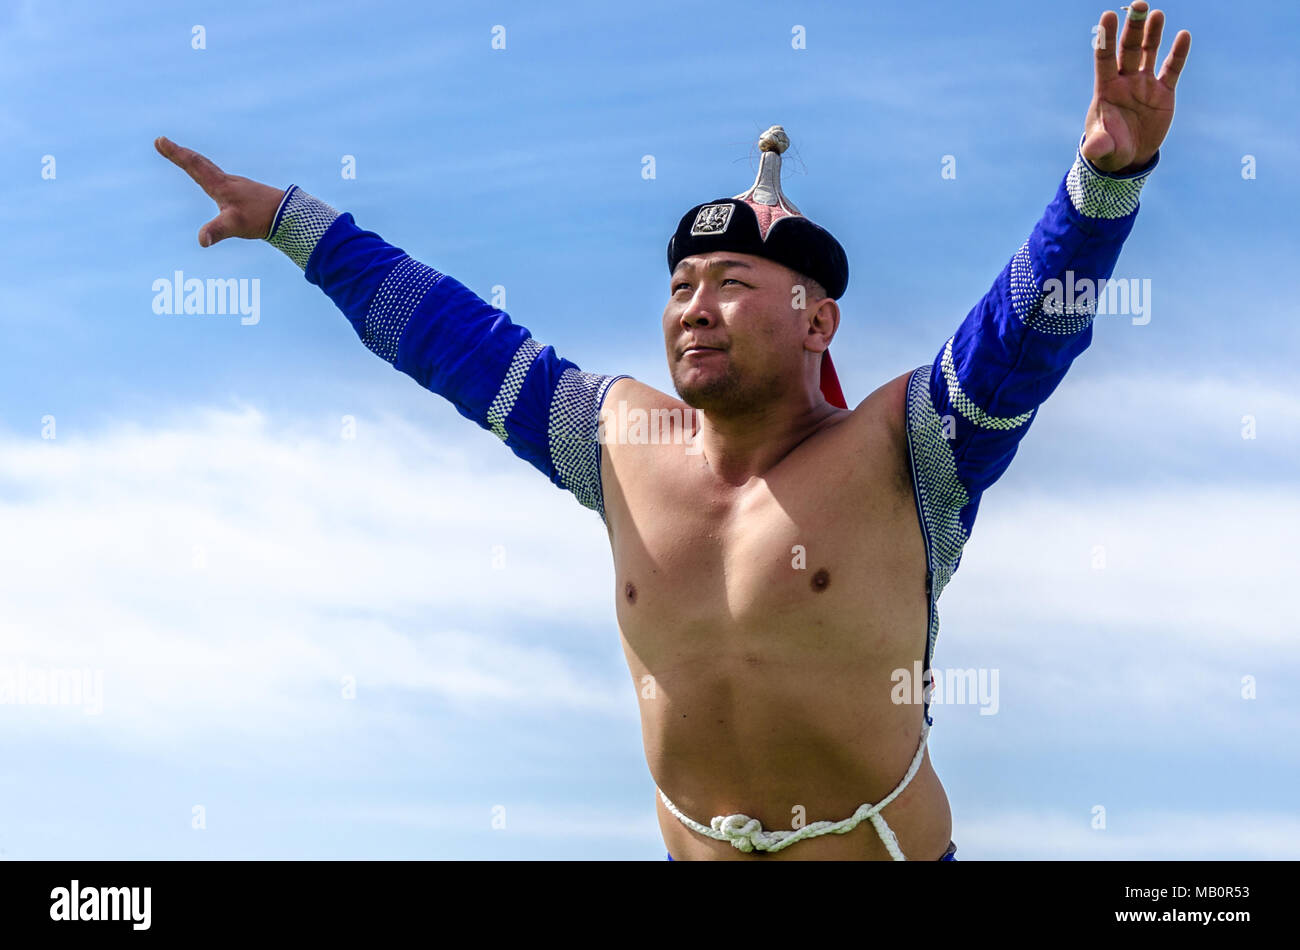 Wrestiling Wettbewerb, NAADAM Festival, Murun, Mongolei Stockfoto